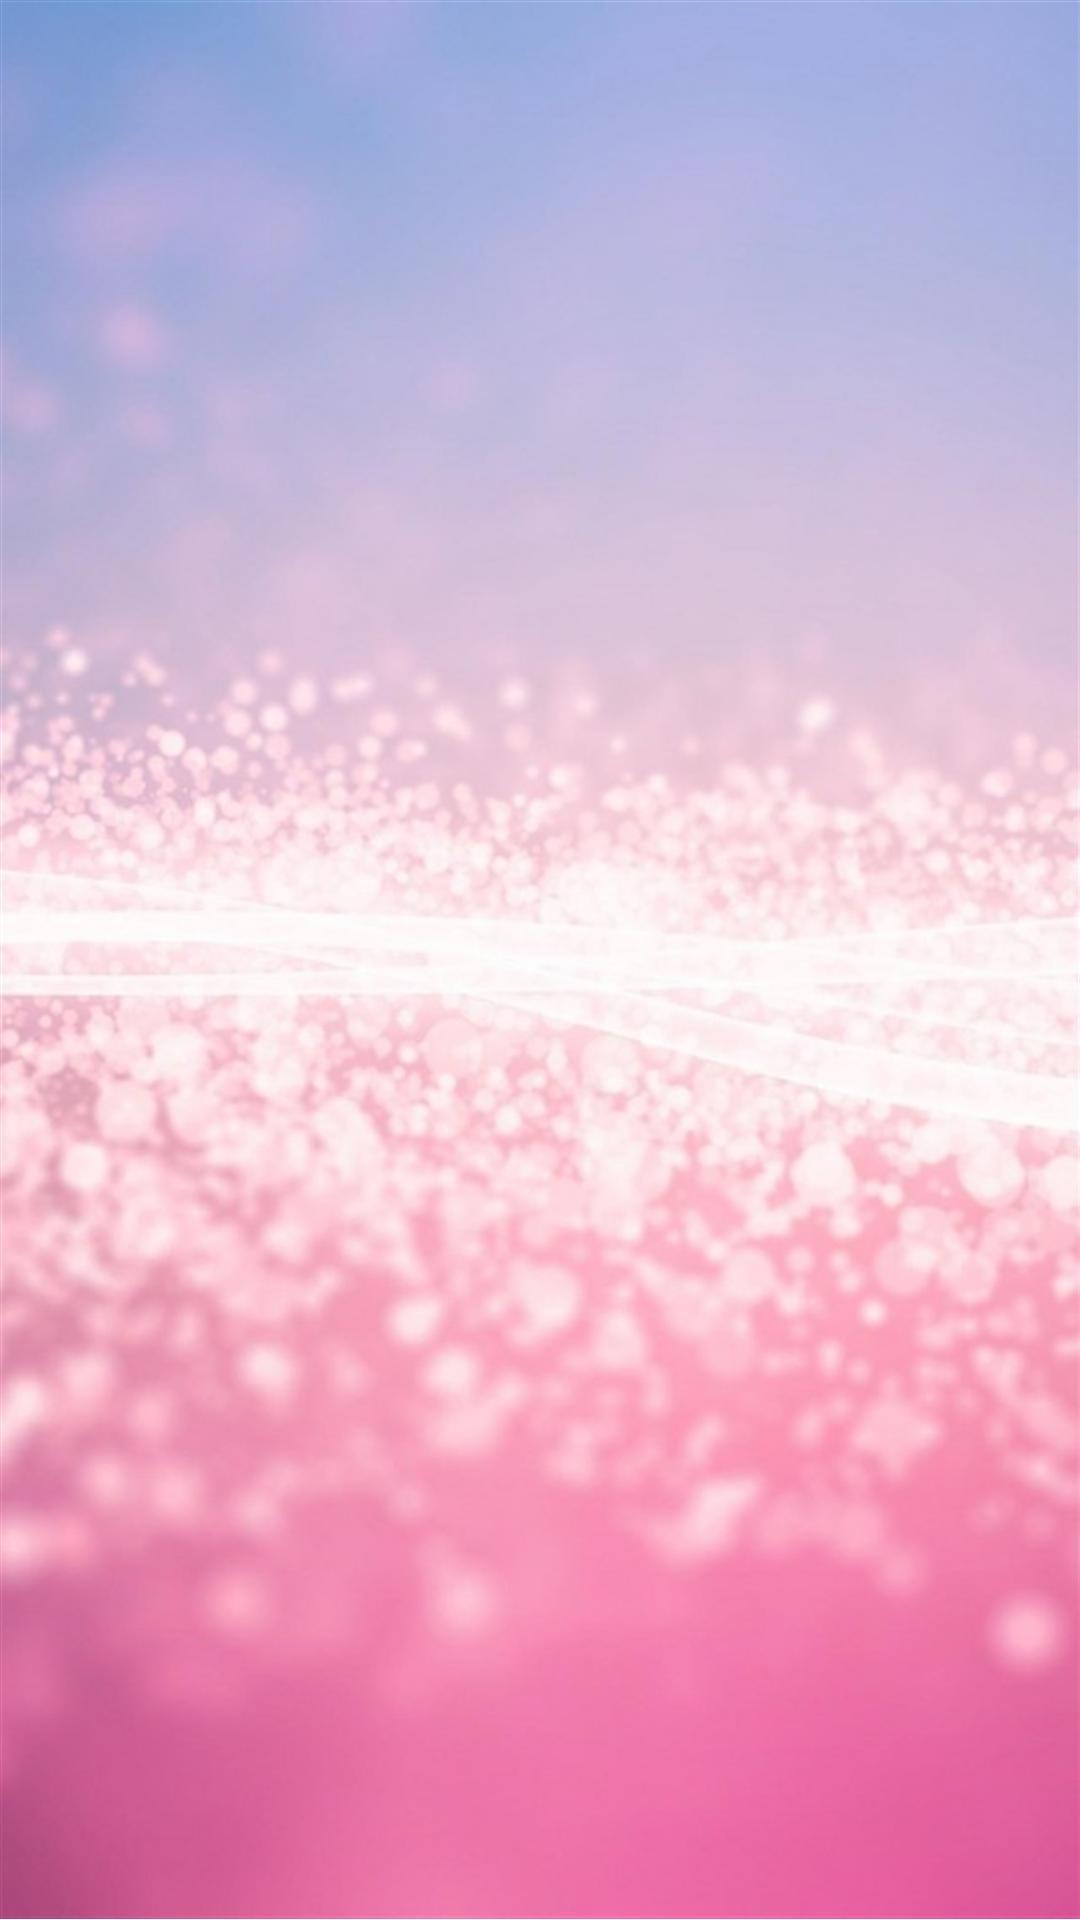 pink glitter wallpaper for walls. Wallpaper Free Download